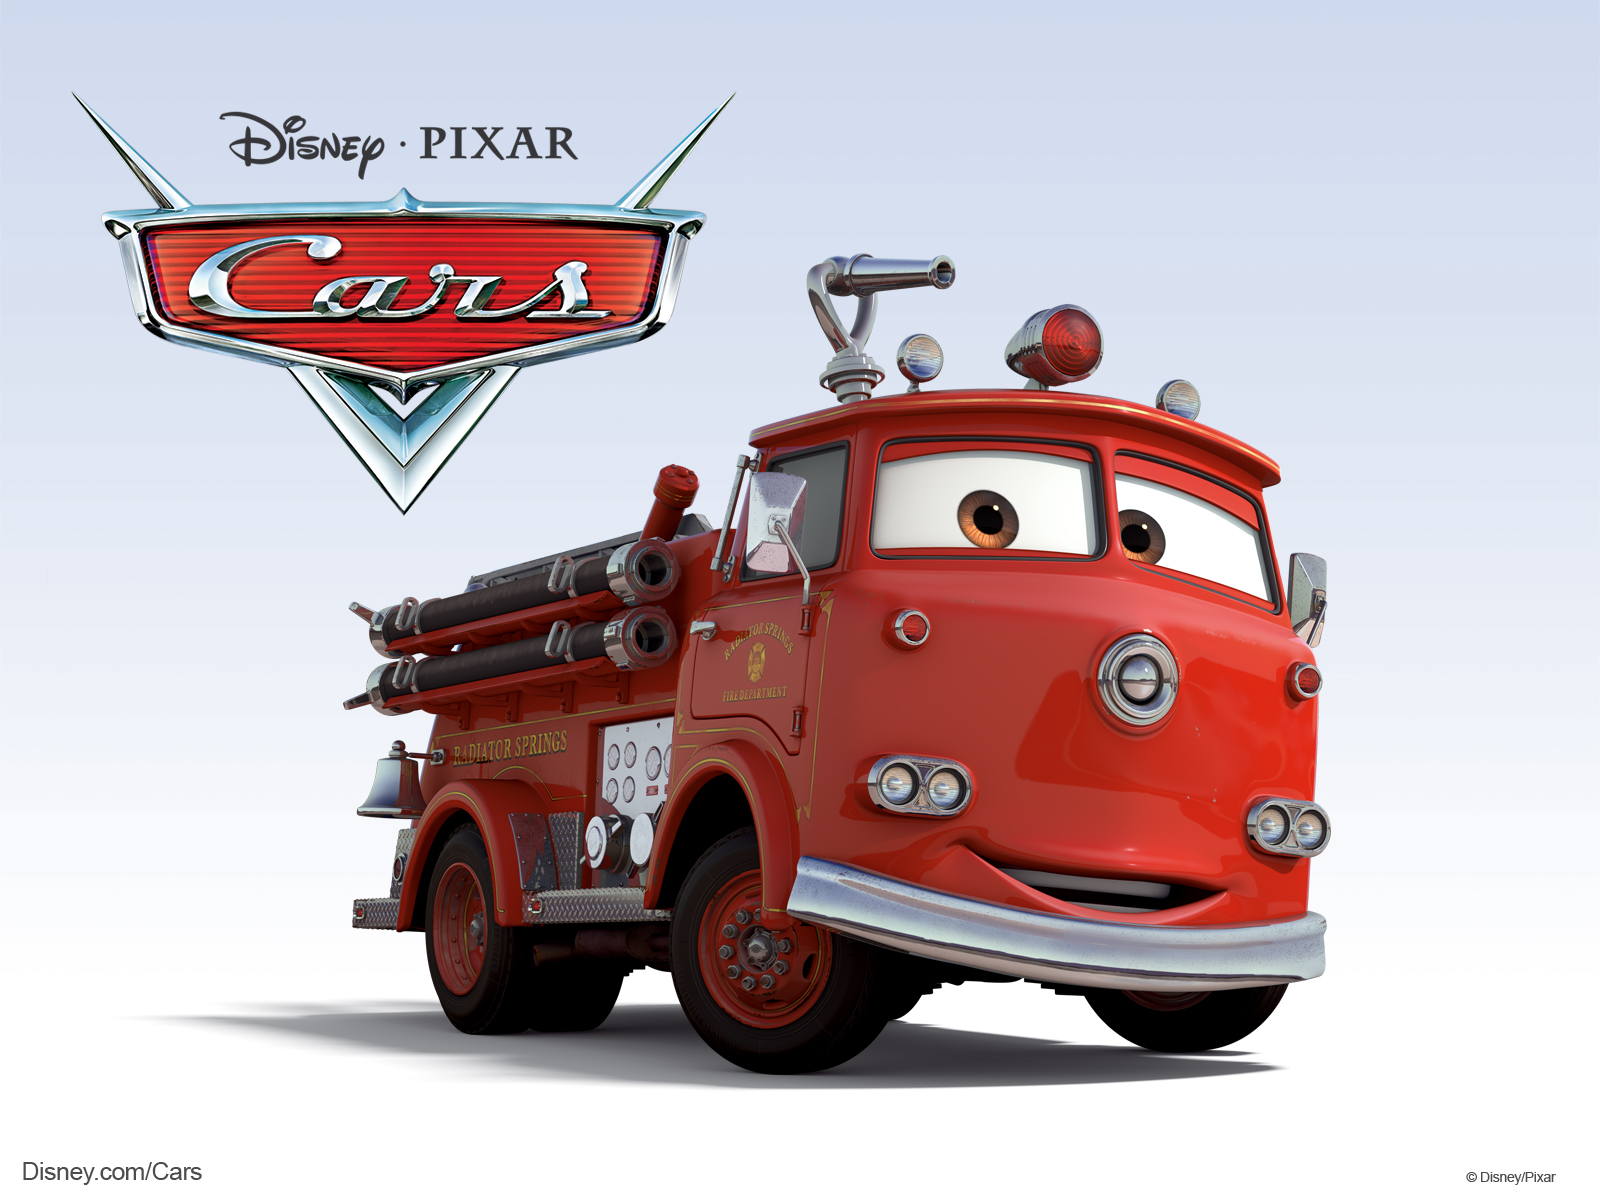 Red the Fire Engine Truck from Disney-Pixar Cars Movie Desktop Wallpaper